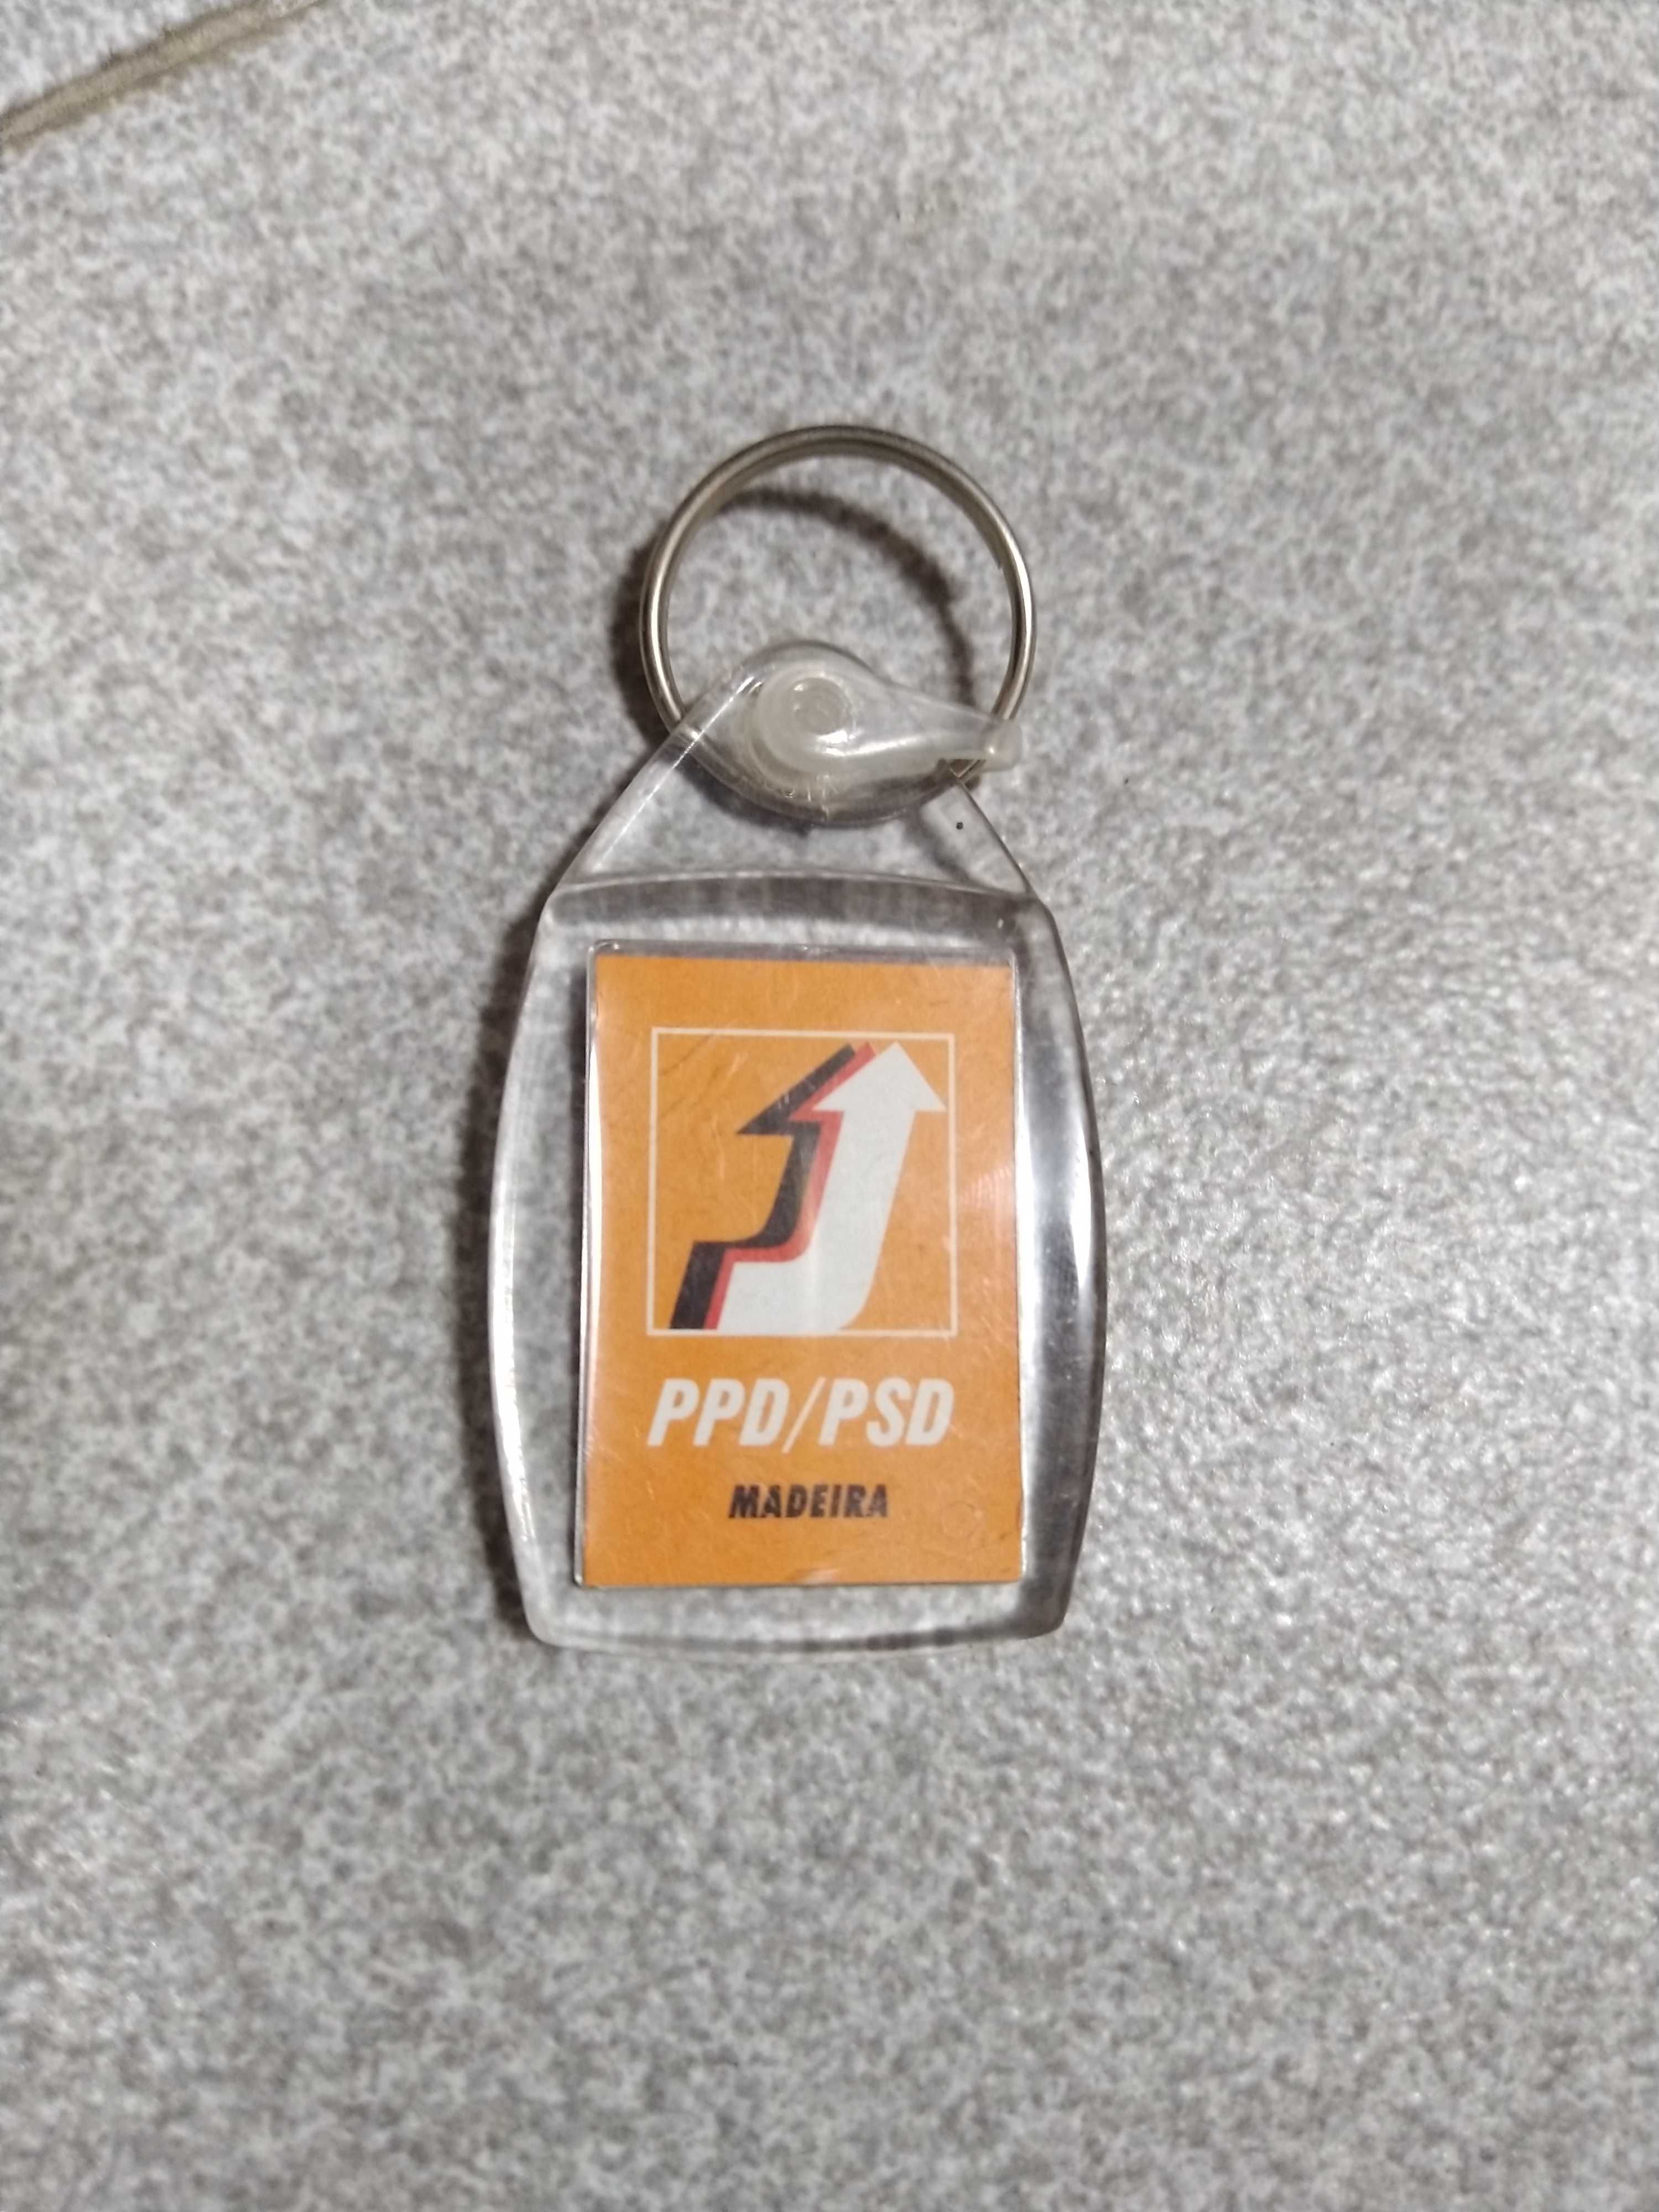 Porta chaves do PPD / PSD Madeira - Anos 90